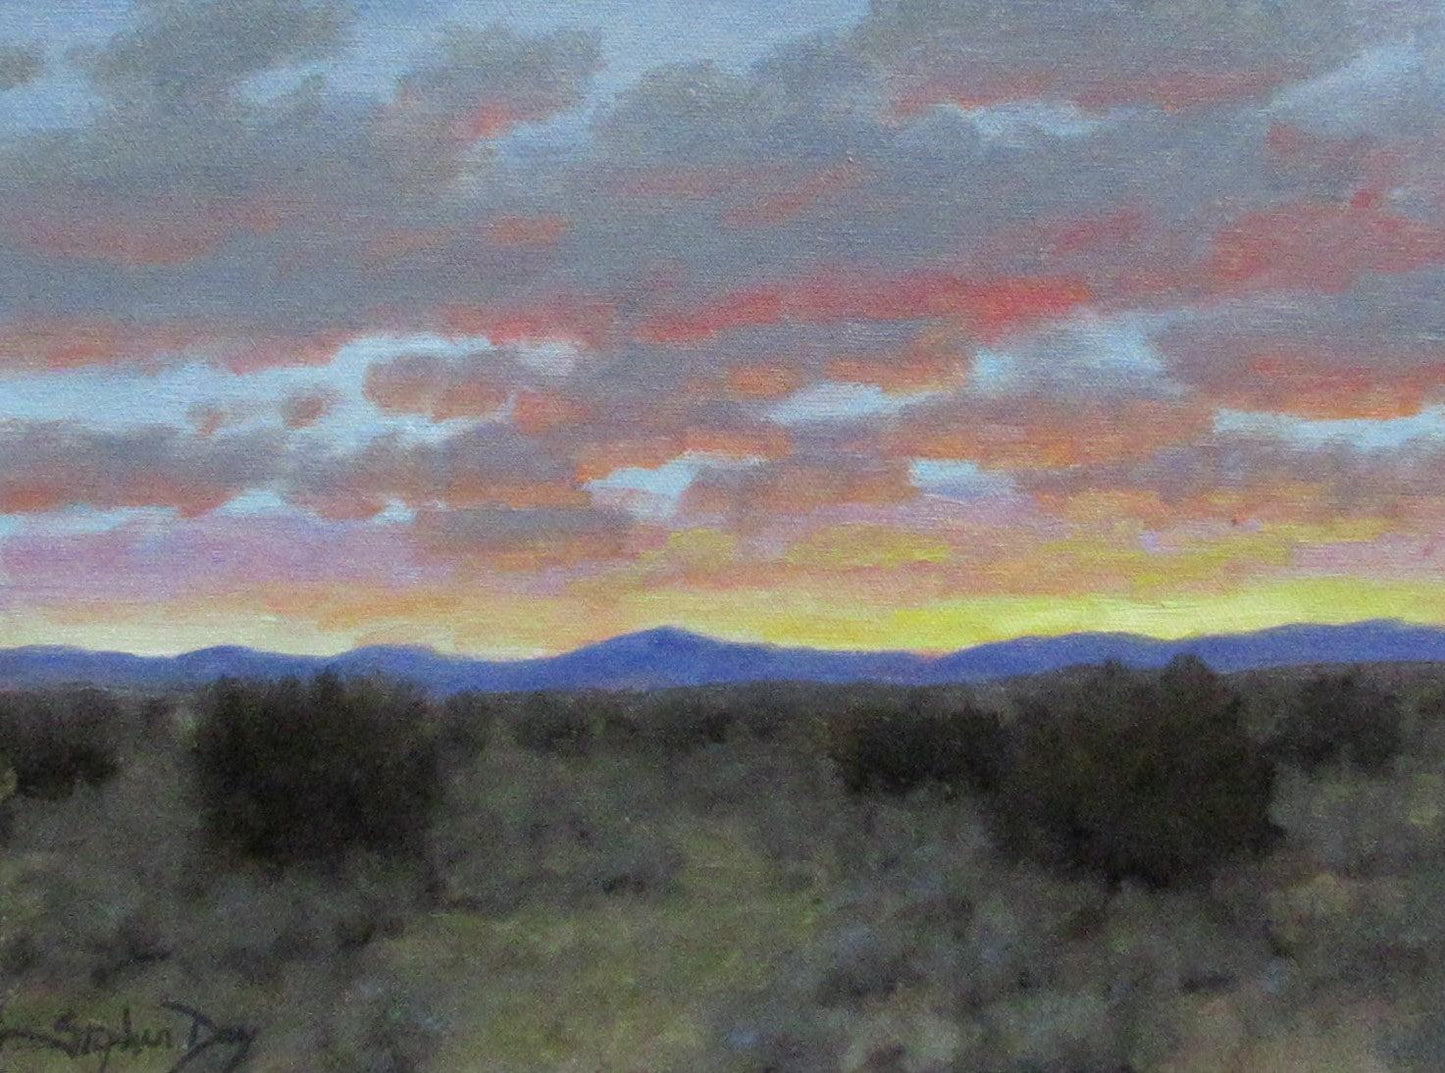 Summer Light-Painting-Stephen Day-Sorrel Sky Gallery